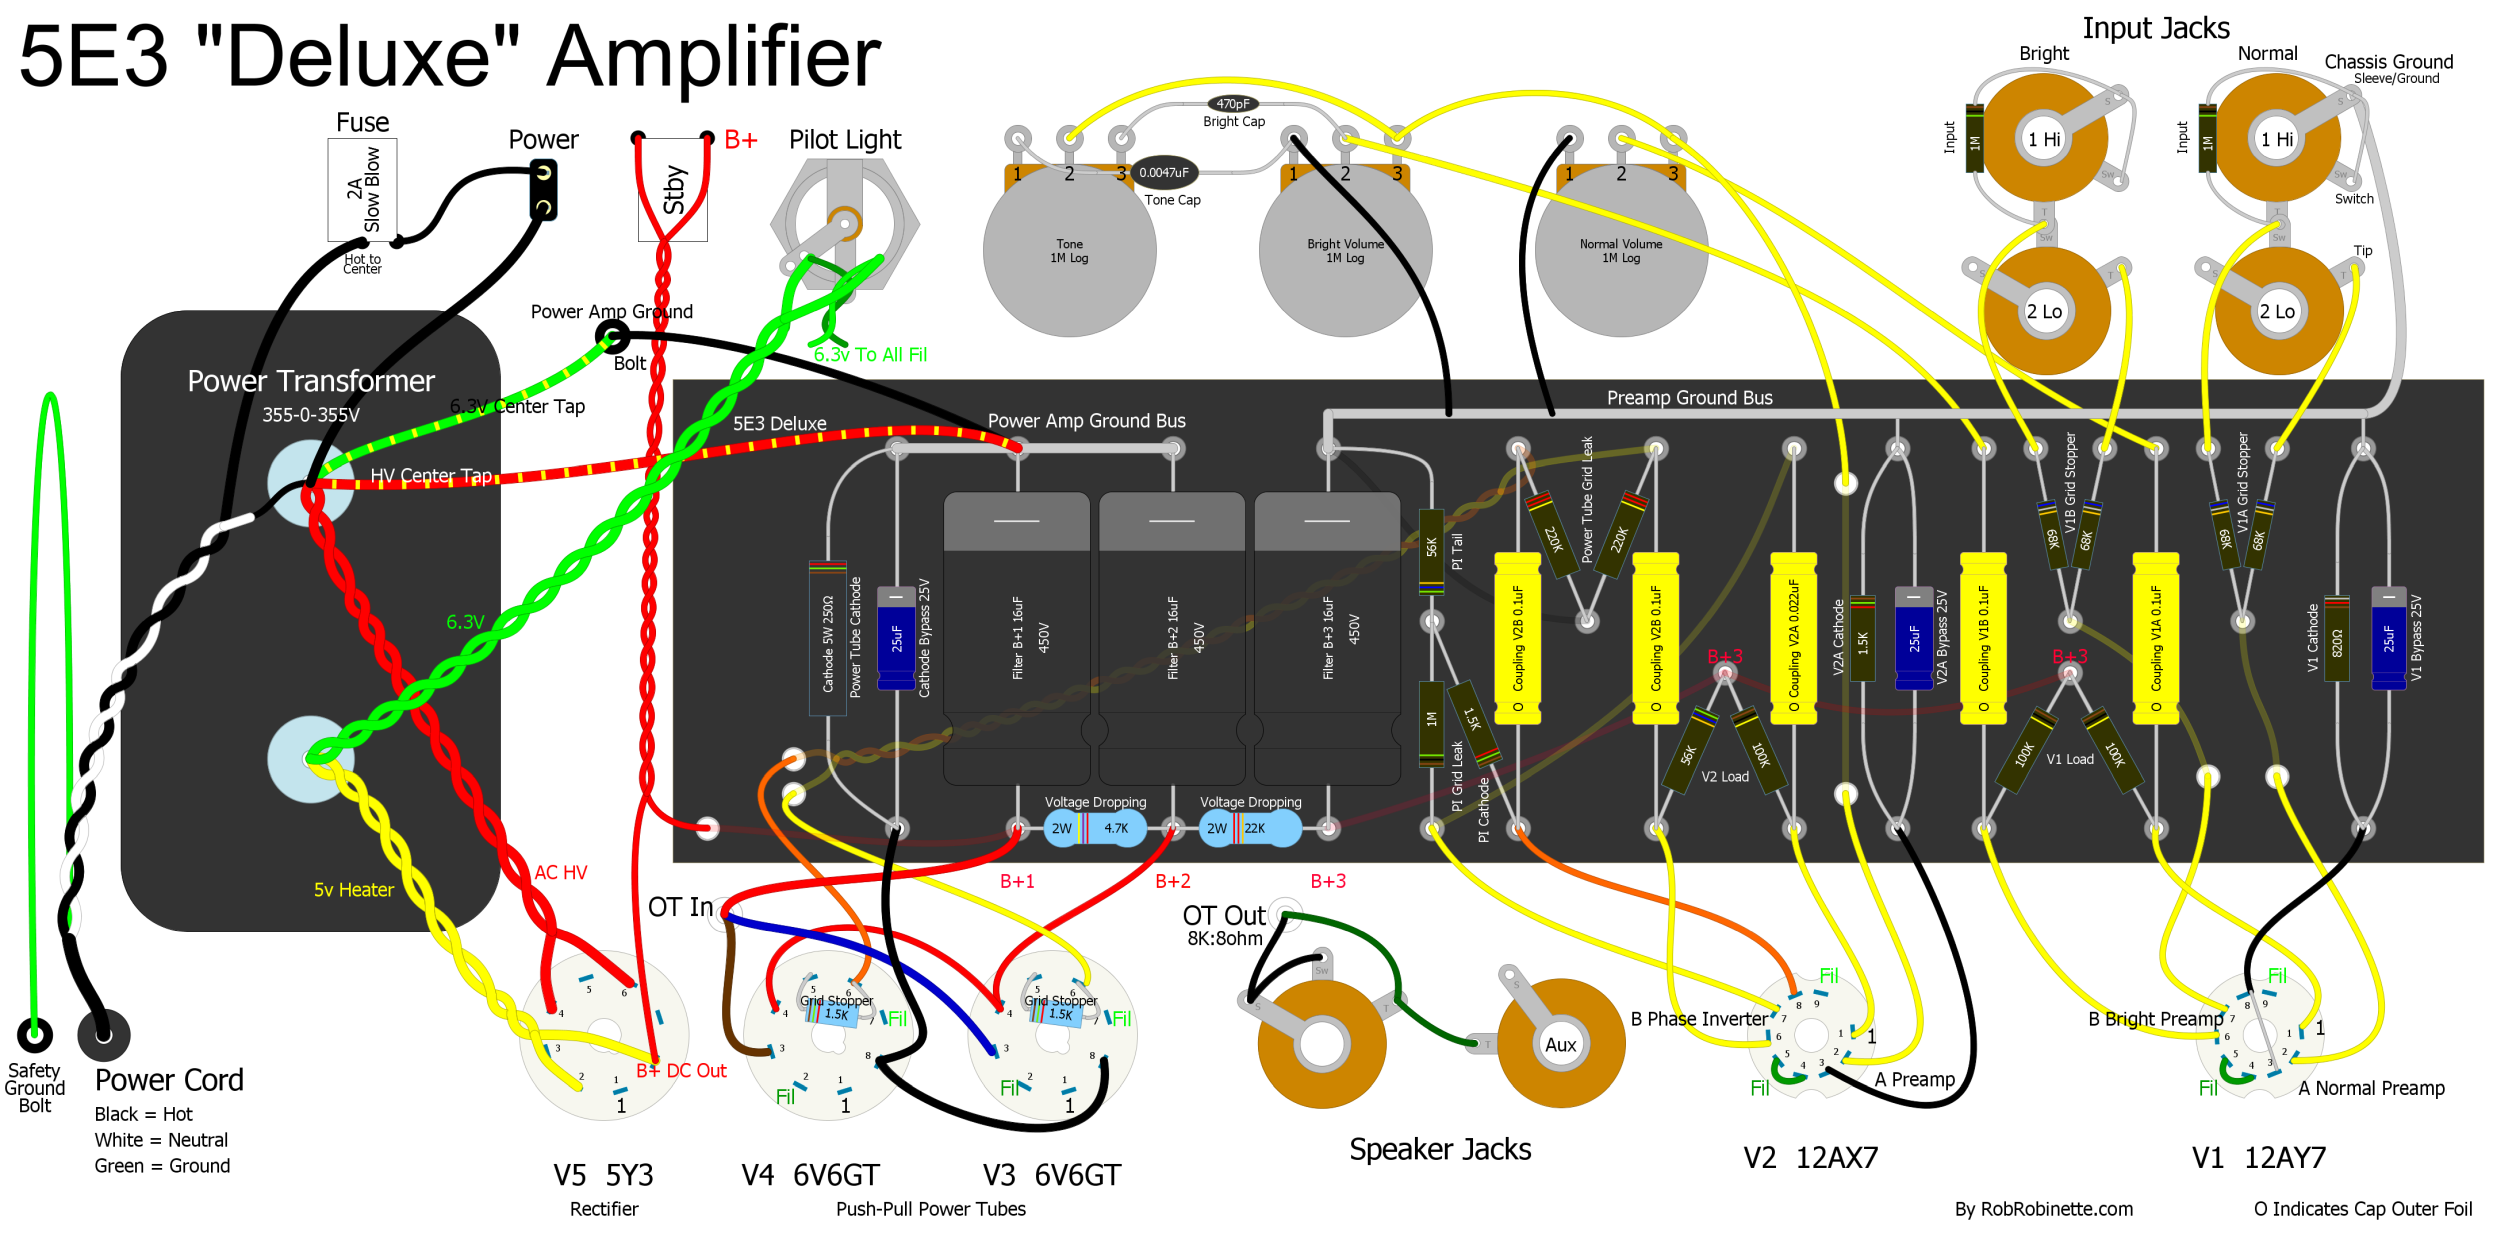 5E3 Mods electric guitar input jack wiring diagram 